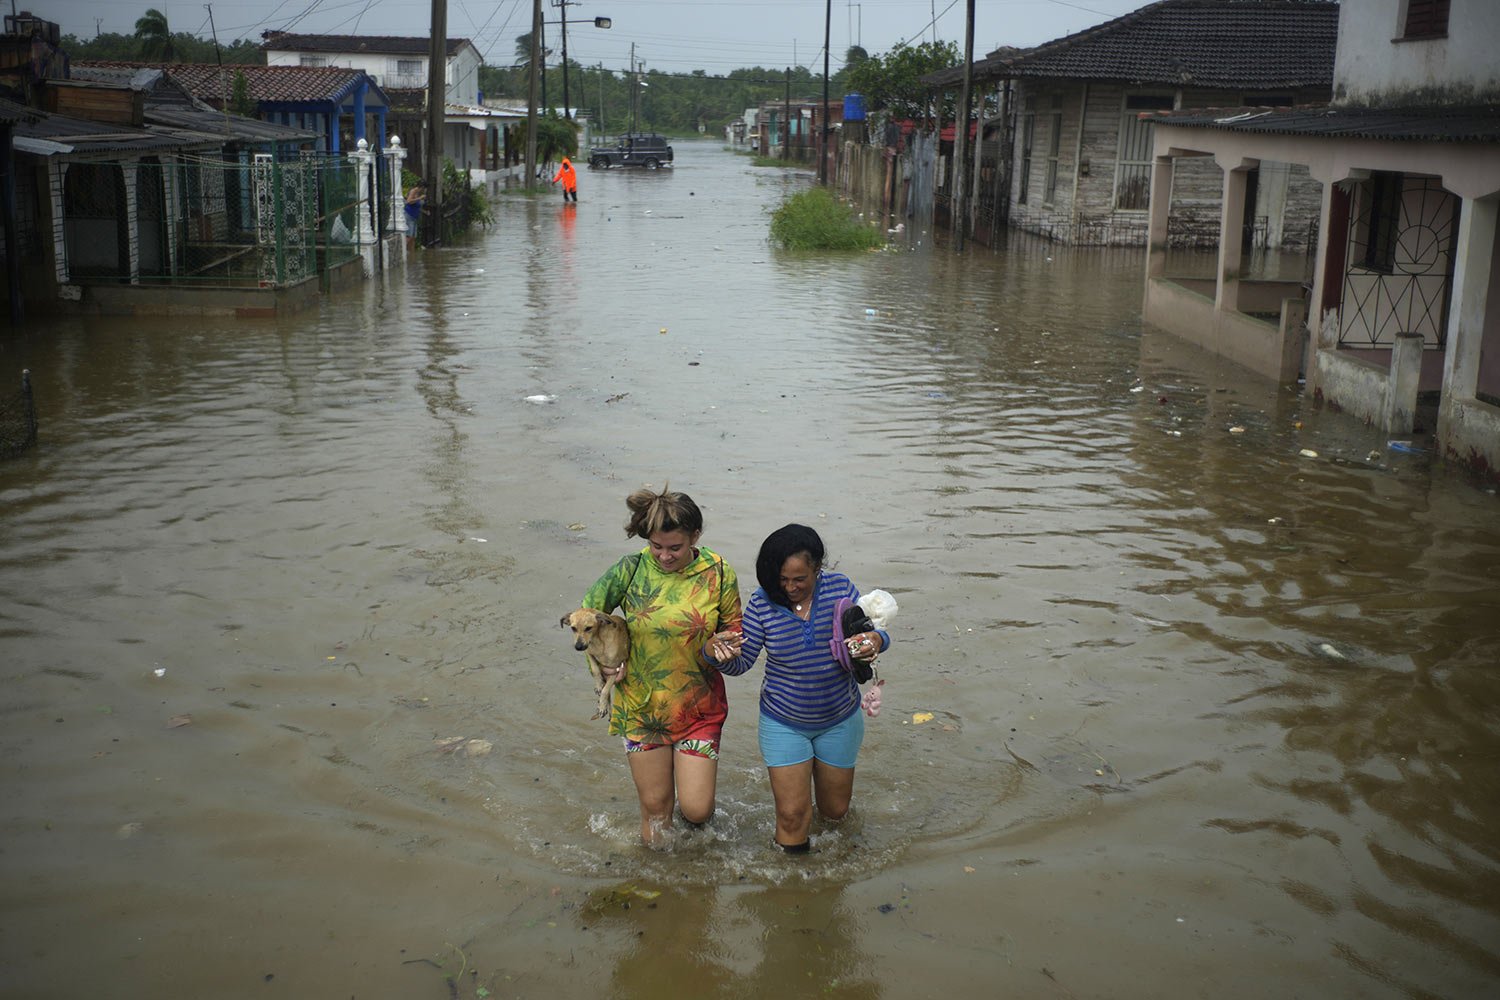  Residents wade through flood waters brought by Hurricane Idalia in Batabano, Cuba, Aug. 29, 2023. (AP Photo/Ramon Espinosa) 